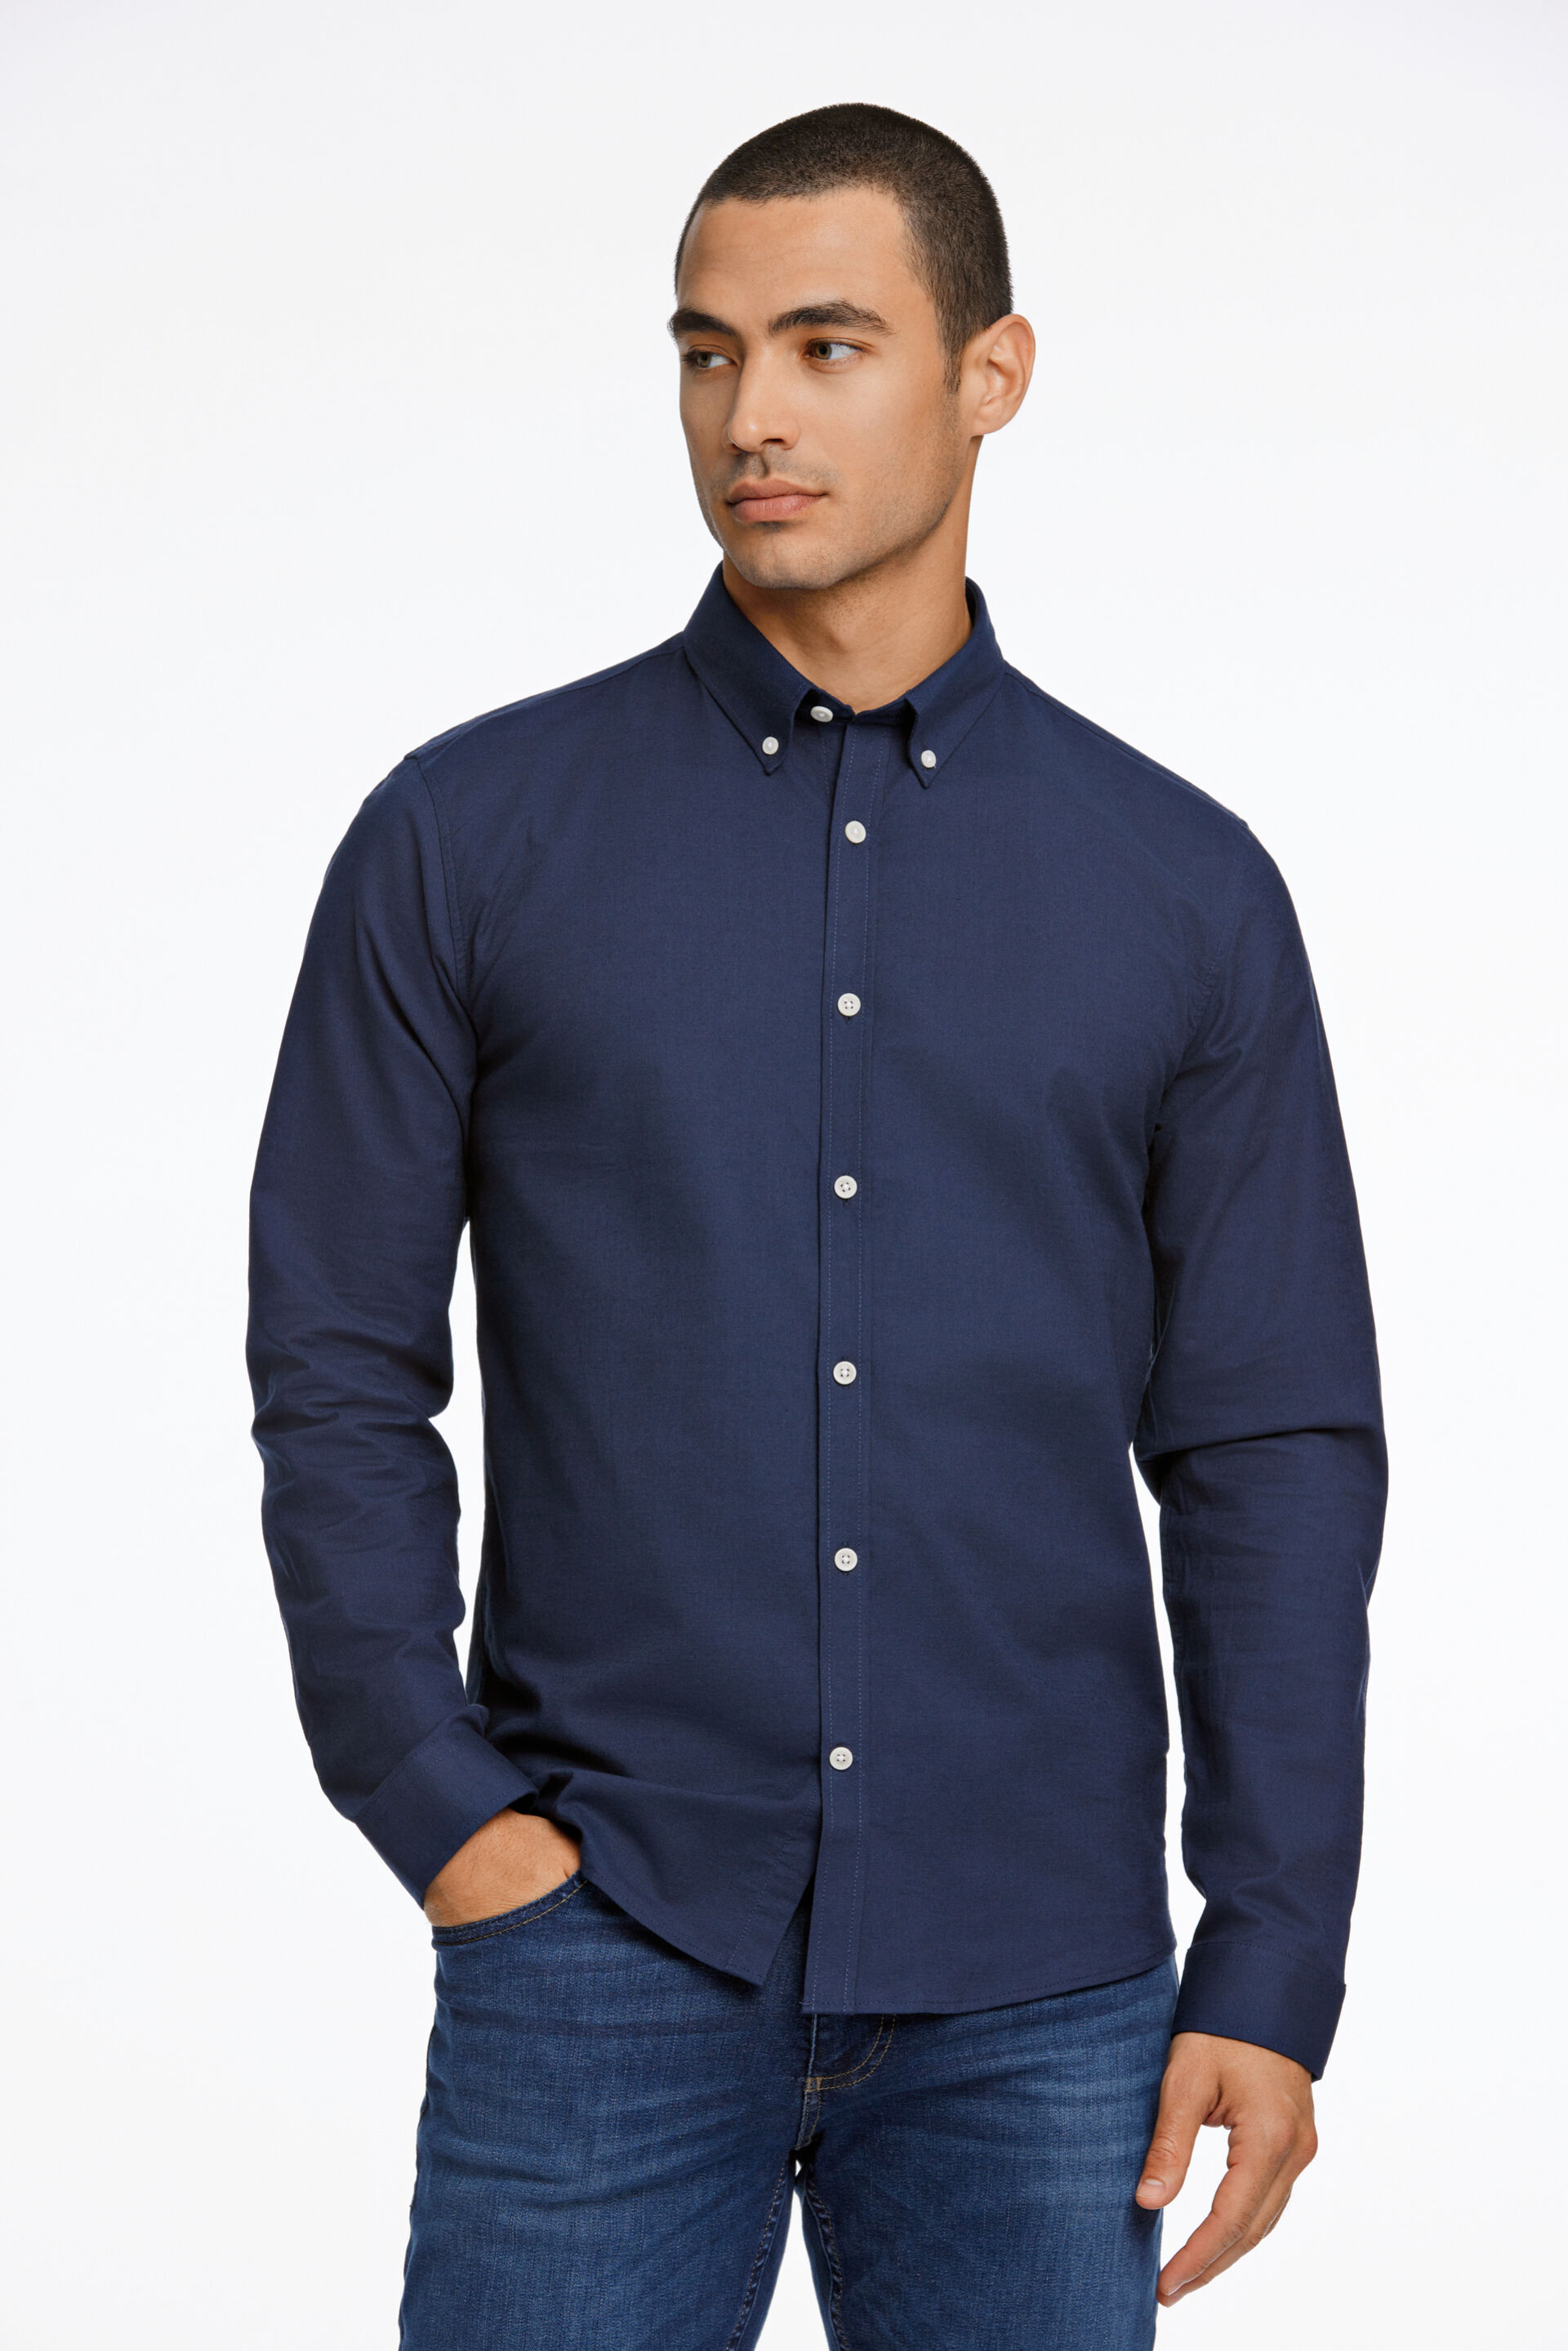 Oxfordskjorta Oxfordskjorta Blå 30-203174